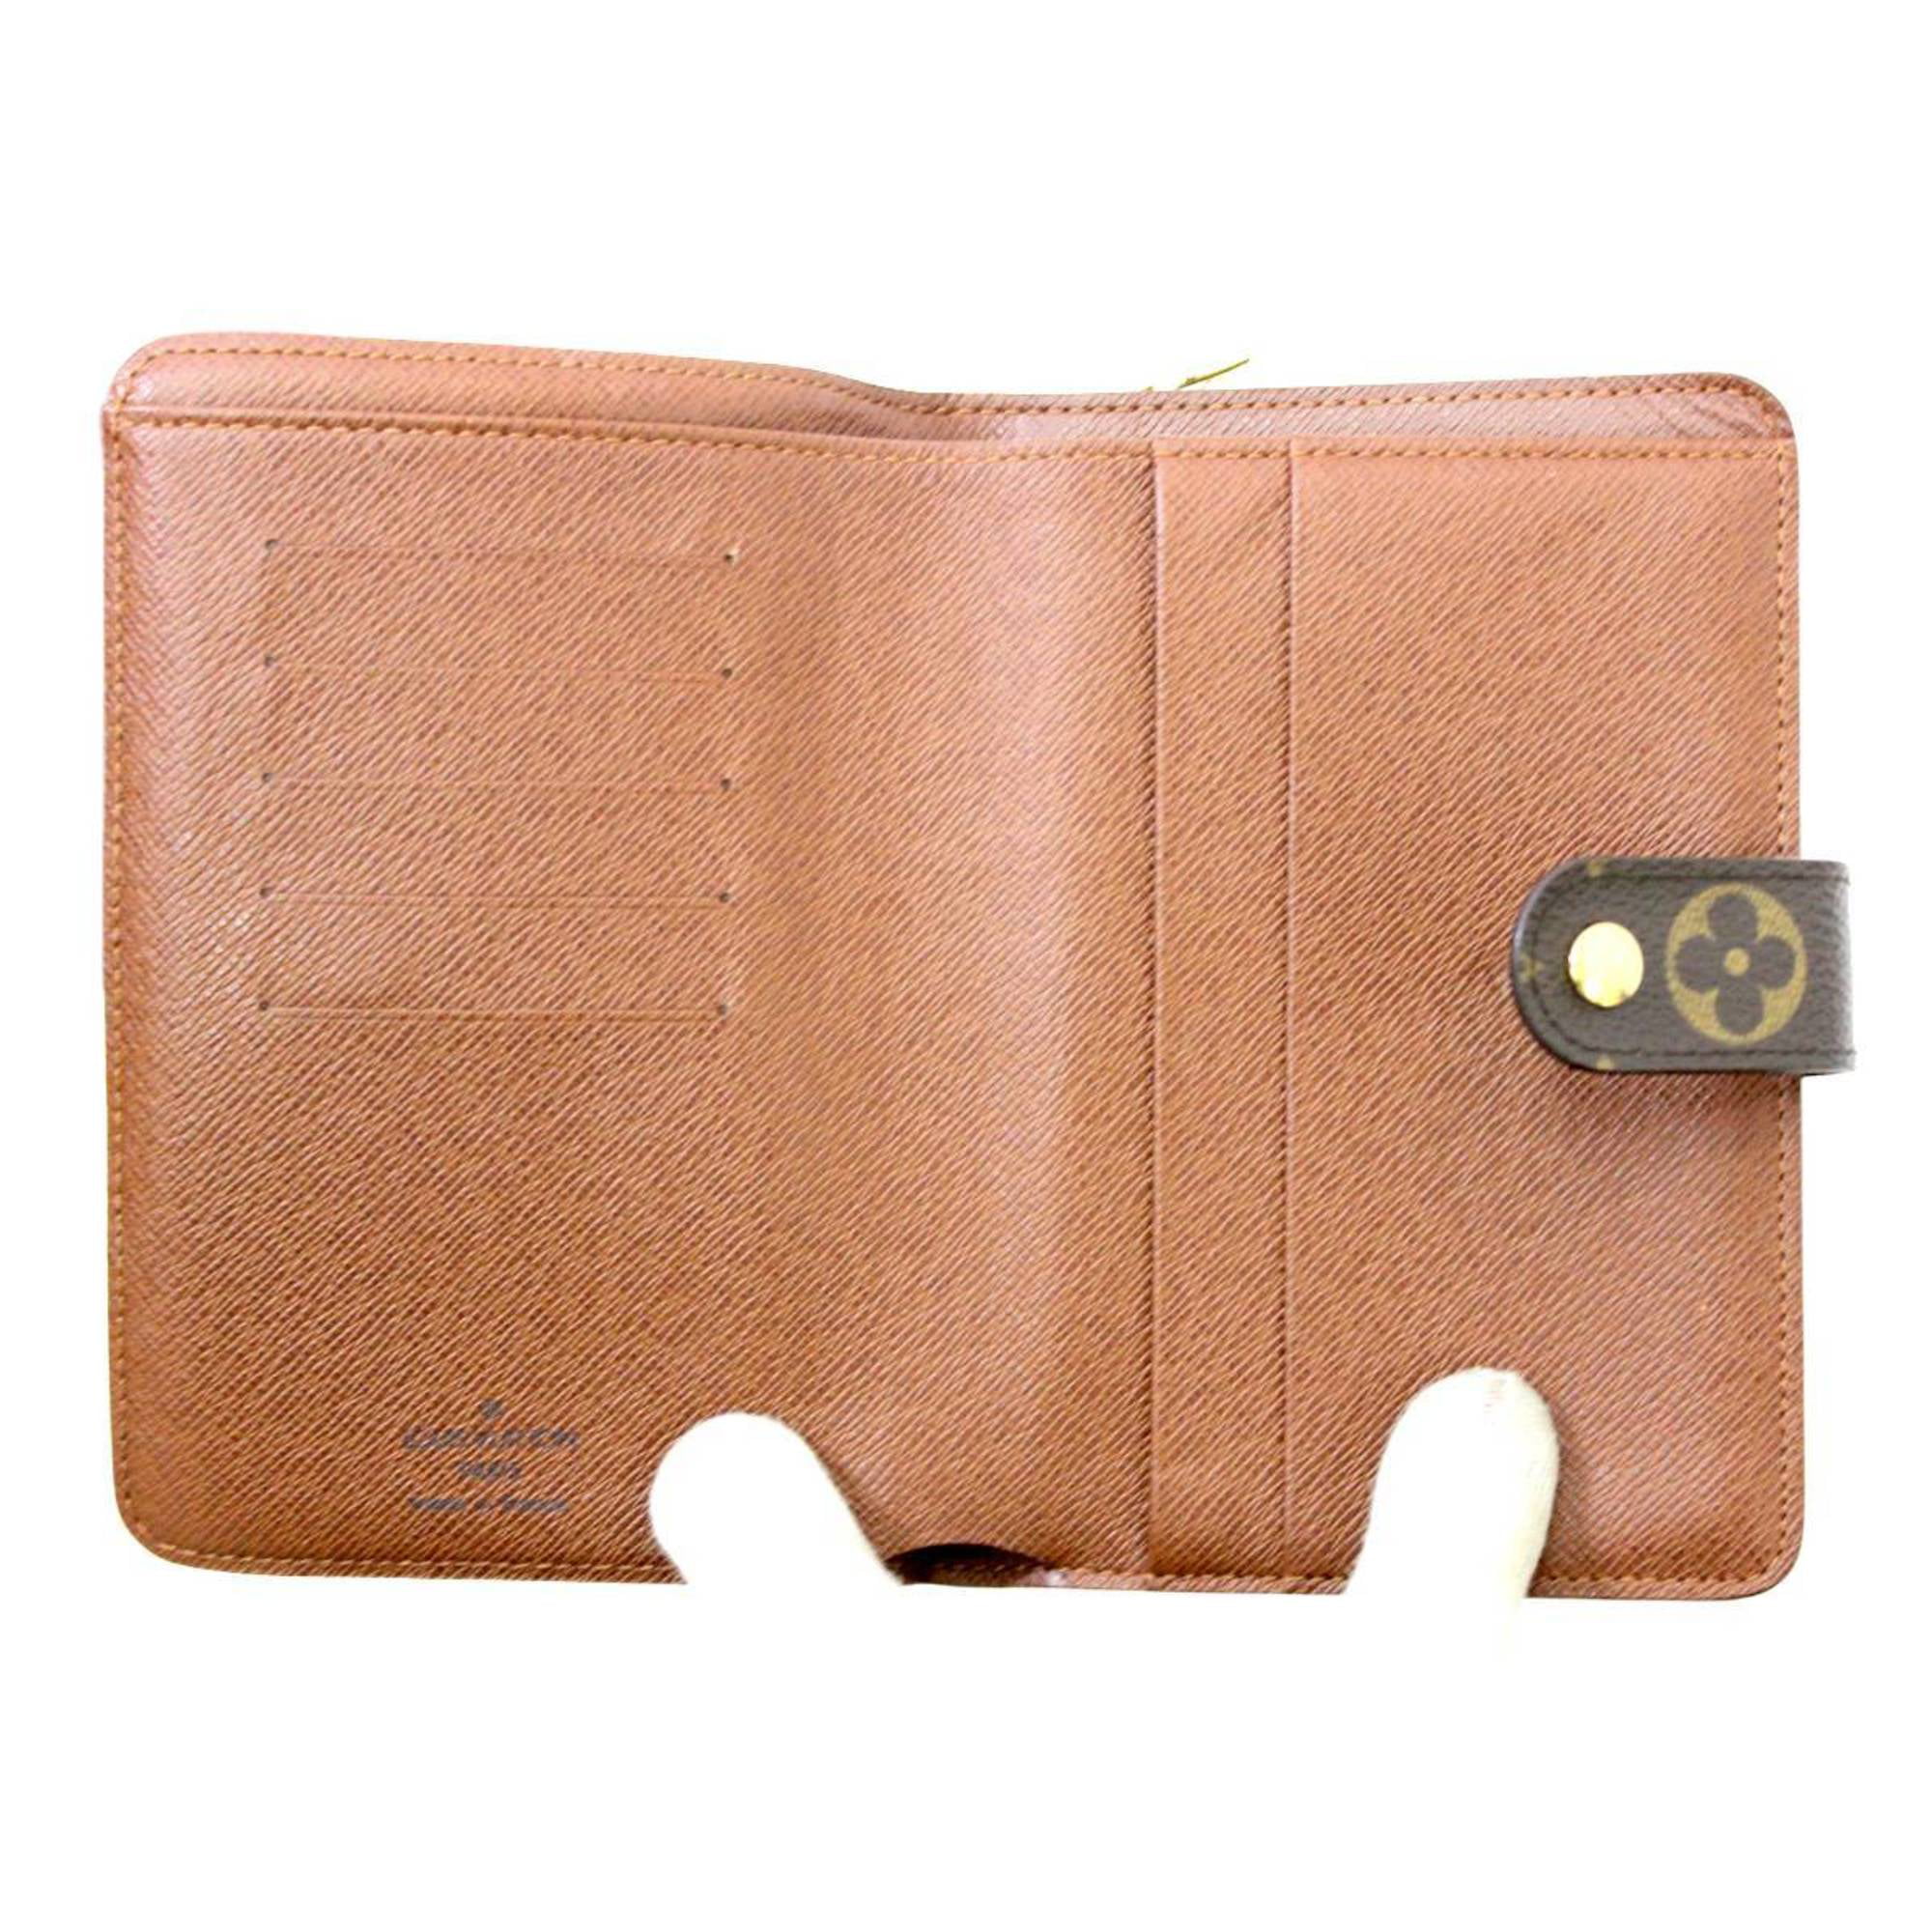 ✨Gently used porte tresor etui papier wallet. In great condition